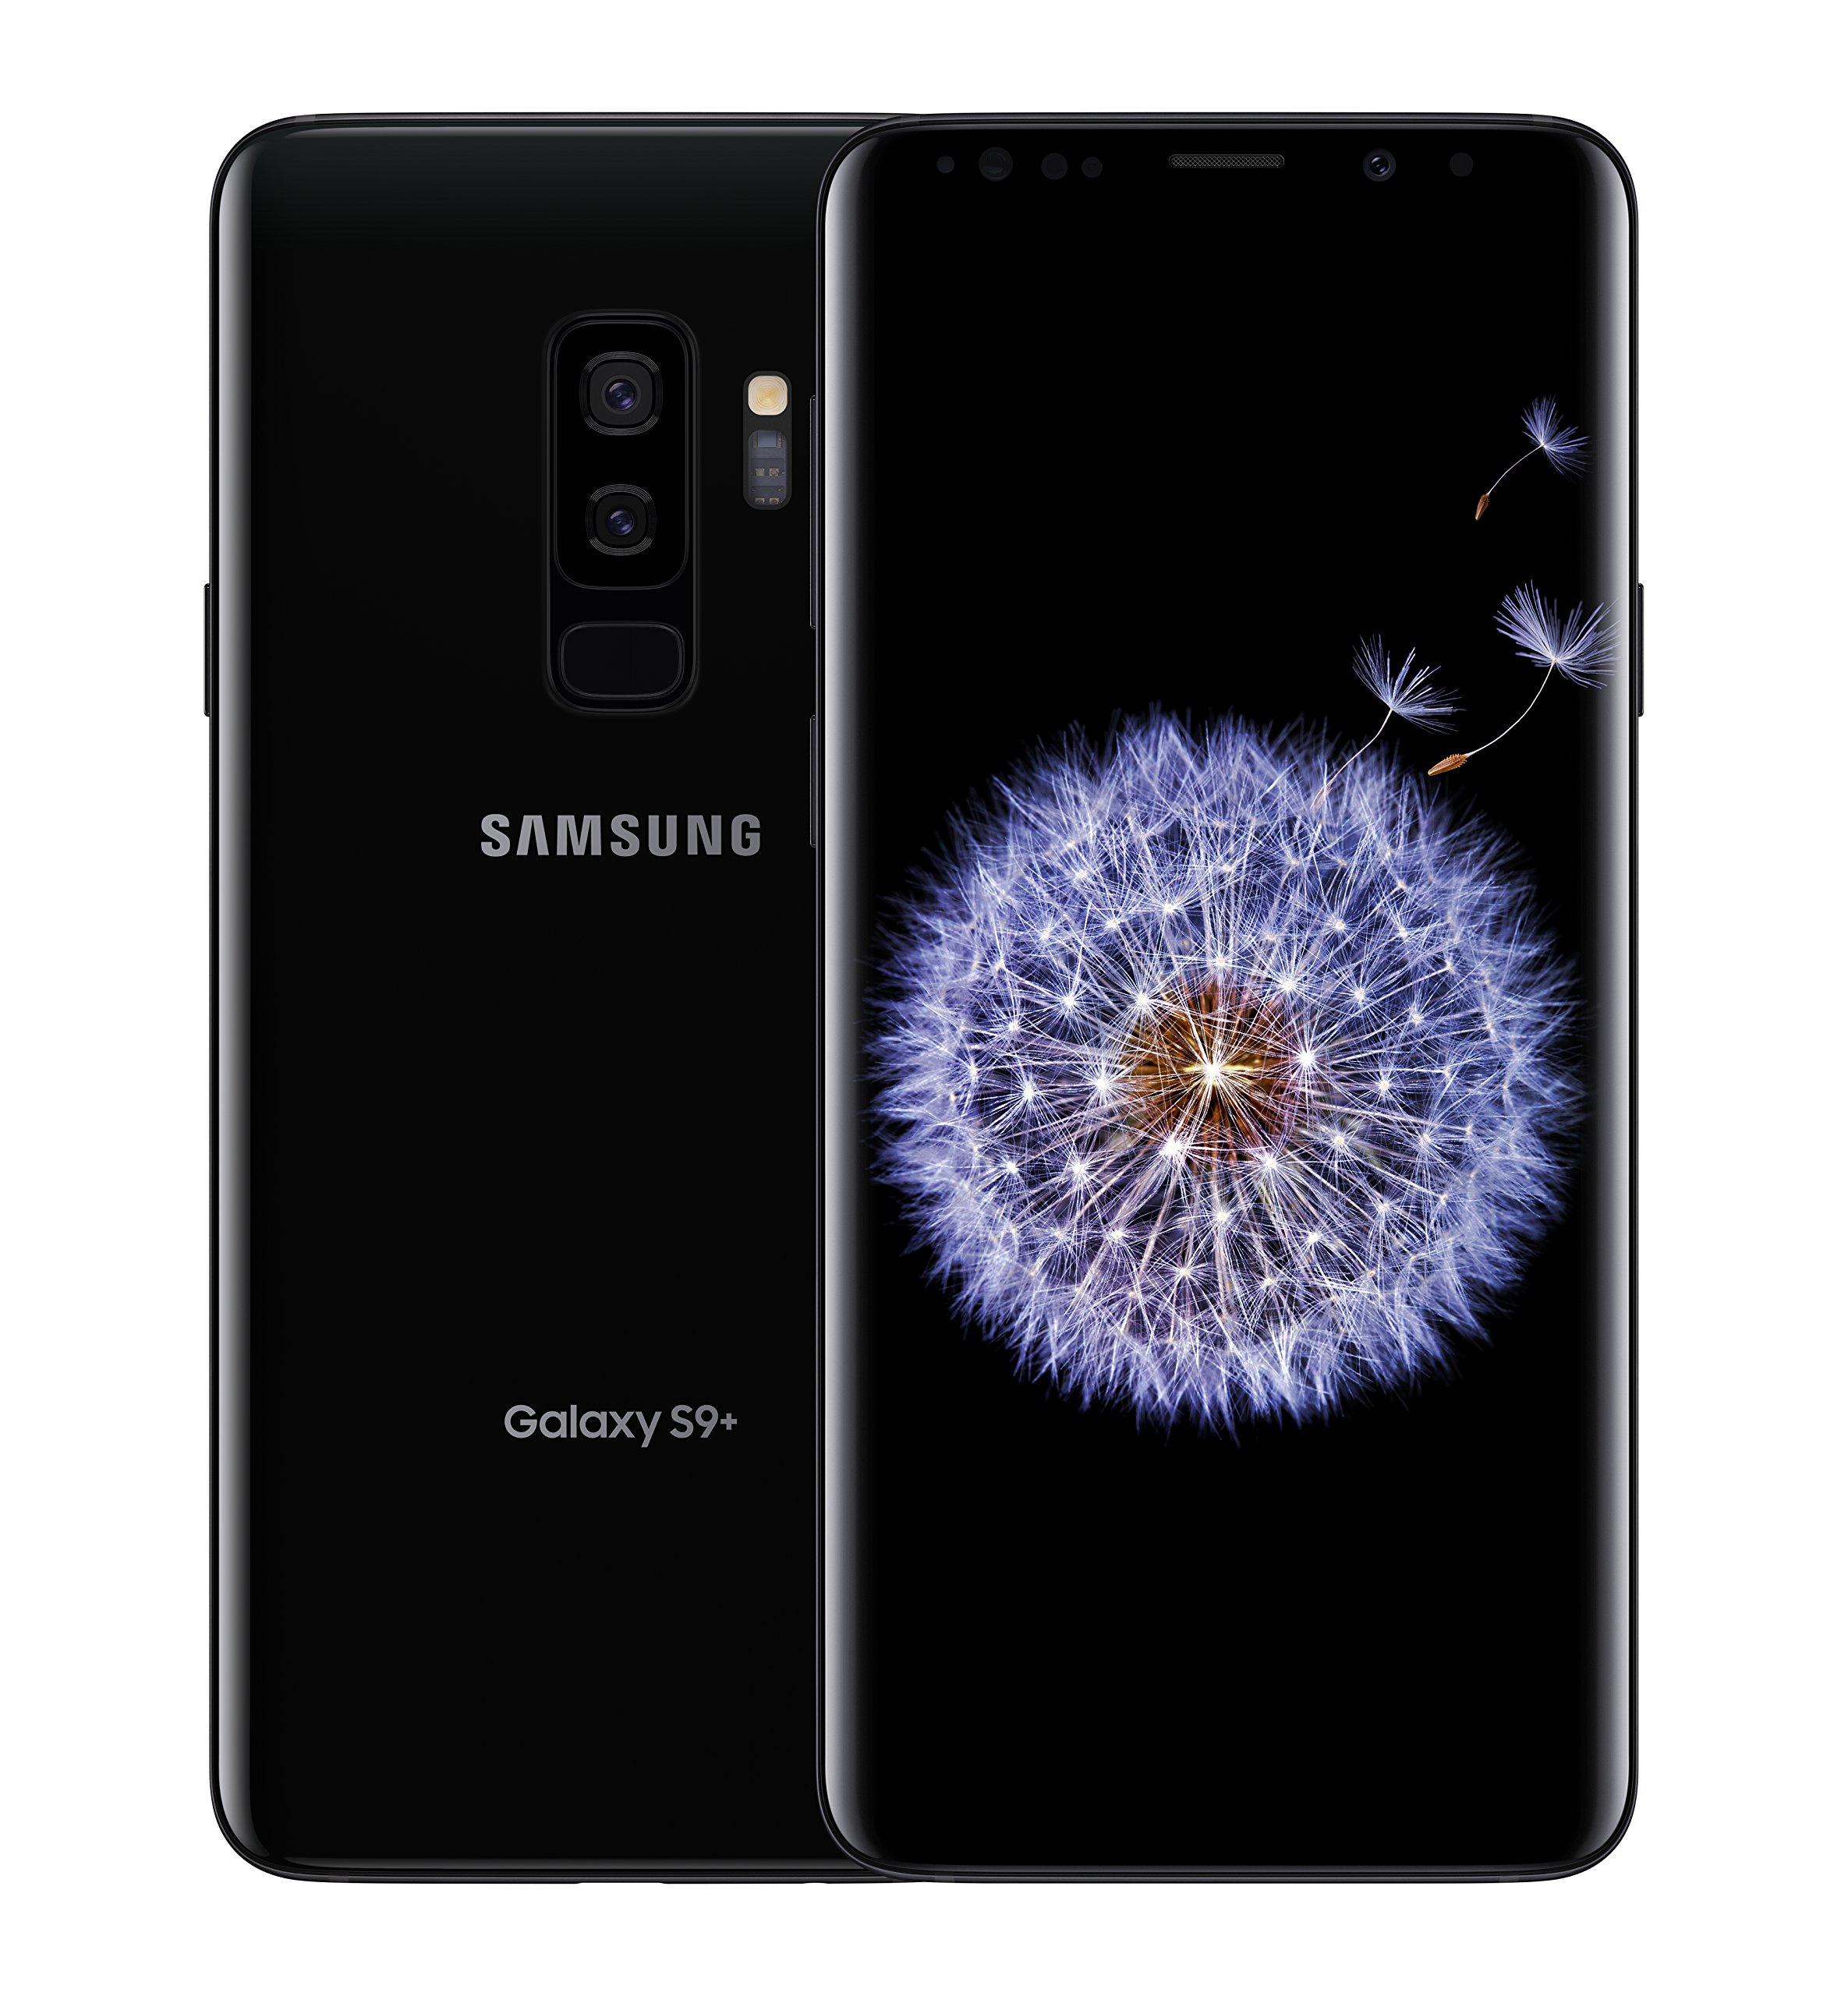 Samsung Galaxy S9 Plus (SM-G965F/DS) 6GB/128GB 6.2-inches LTE Dual SIM Factory Unlocked - International Stock No Warranty (Midnight Black)